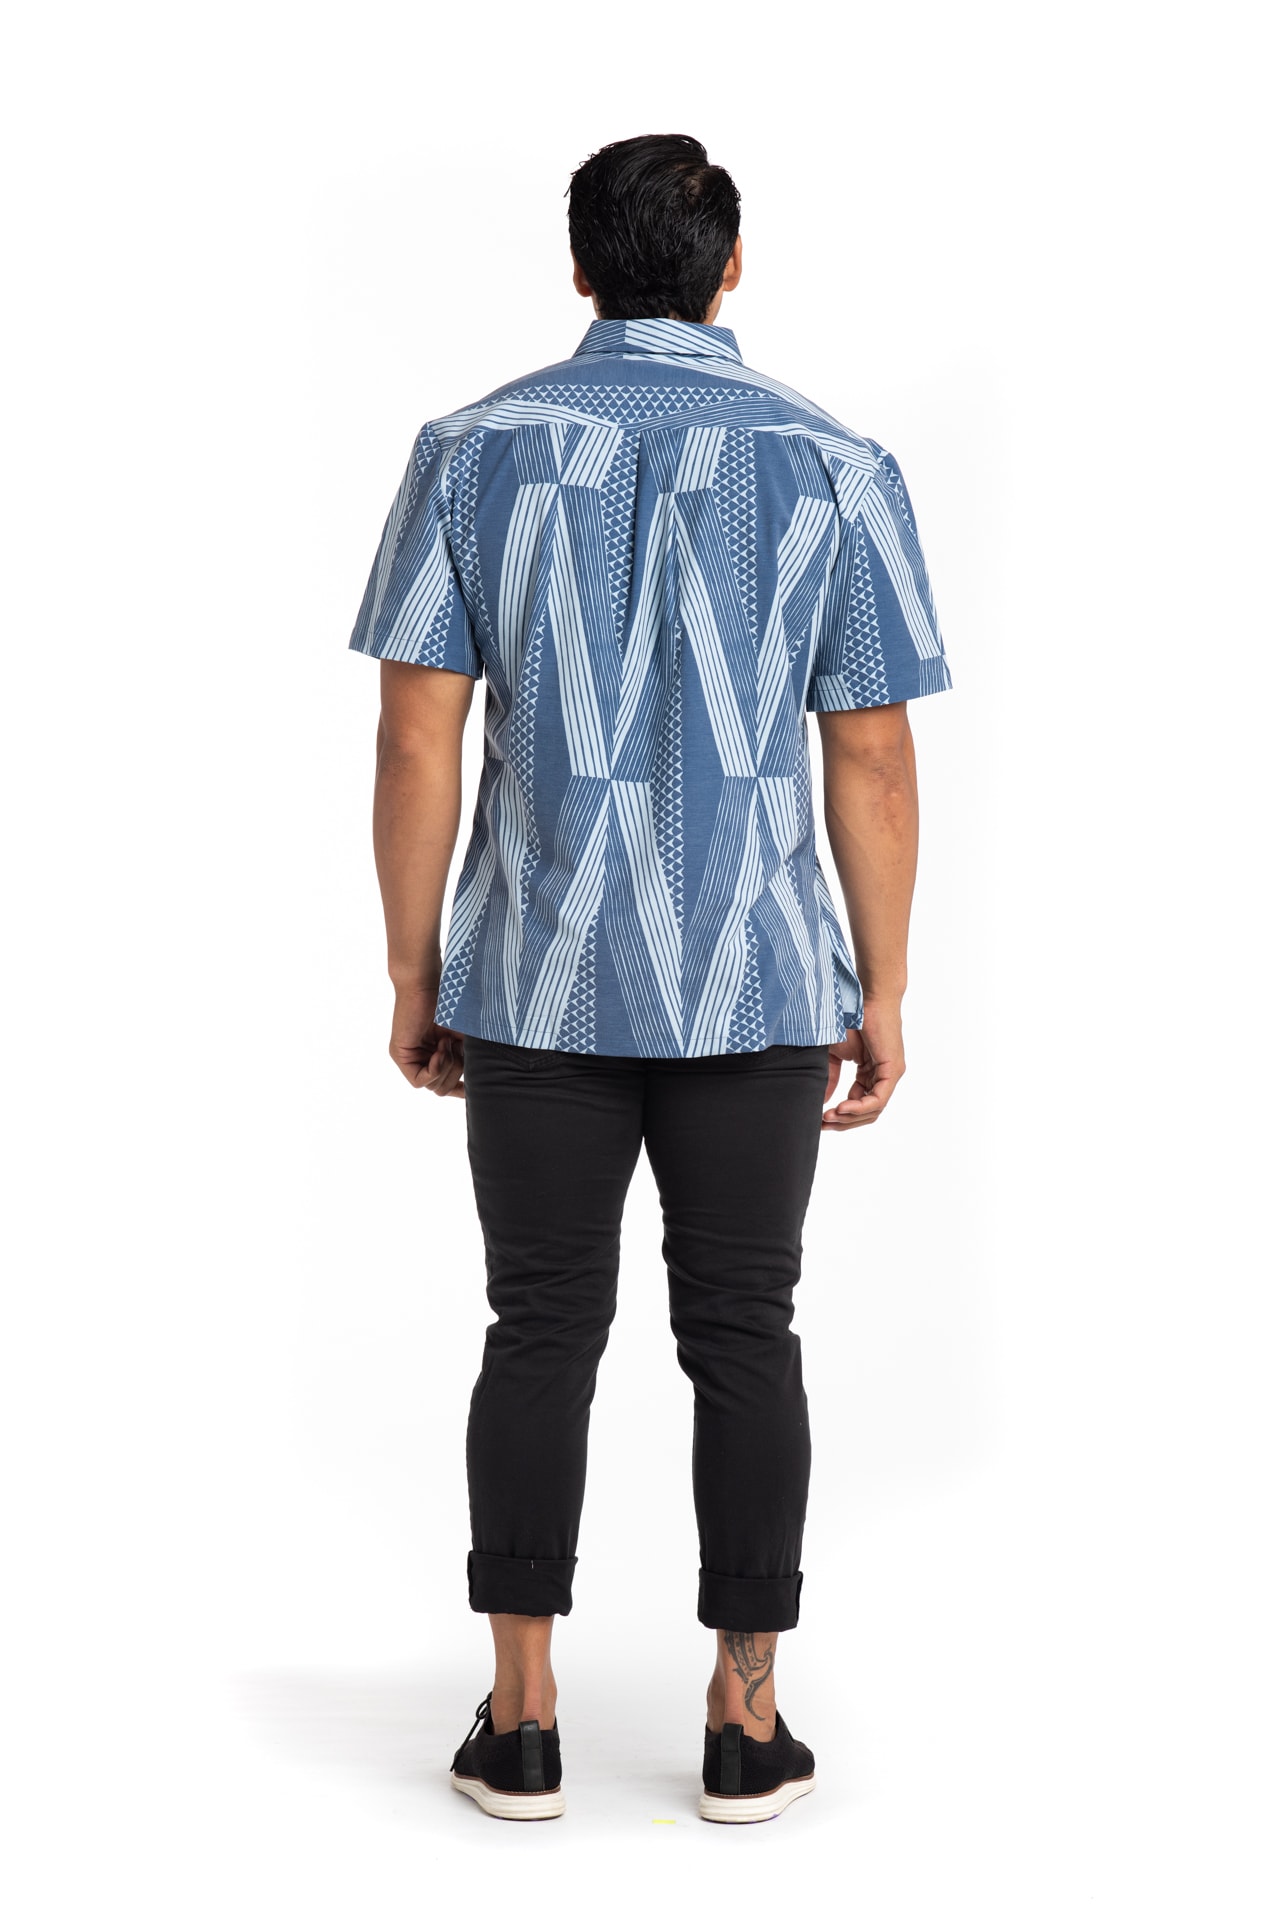 Male model wearing Mahalo Nui Shirt - Back View